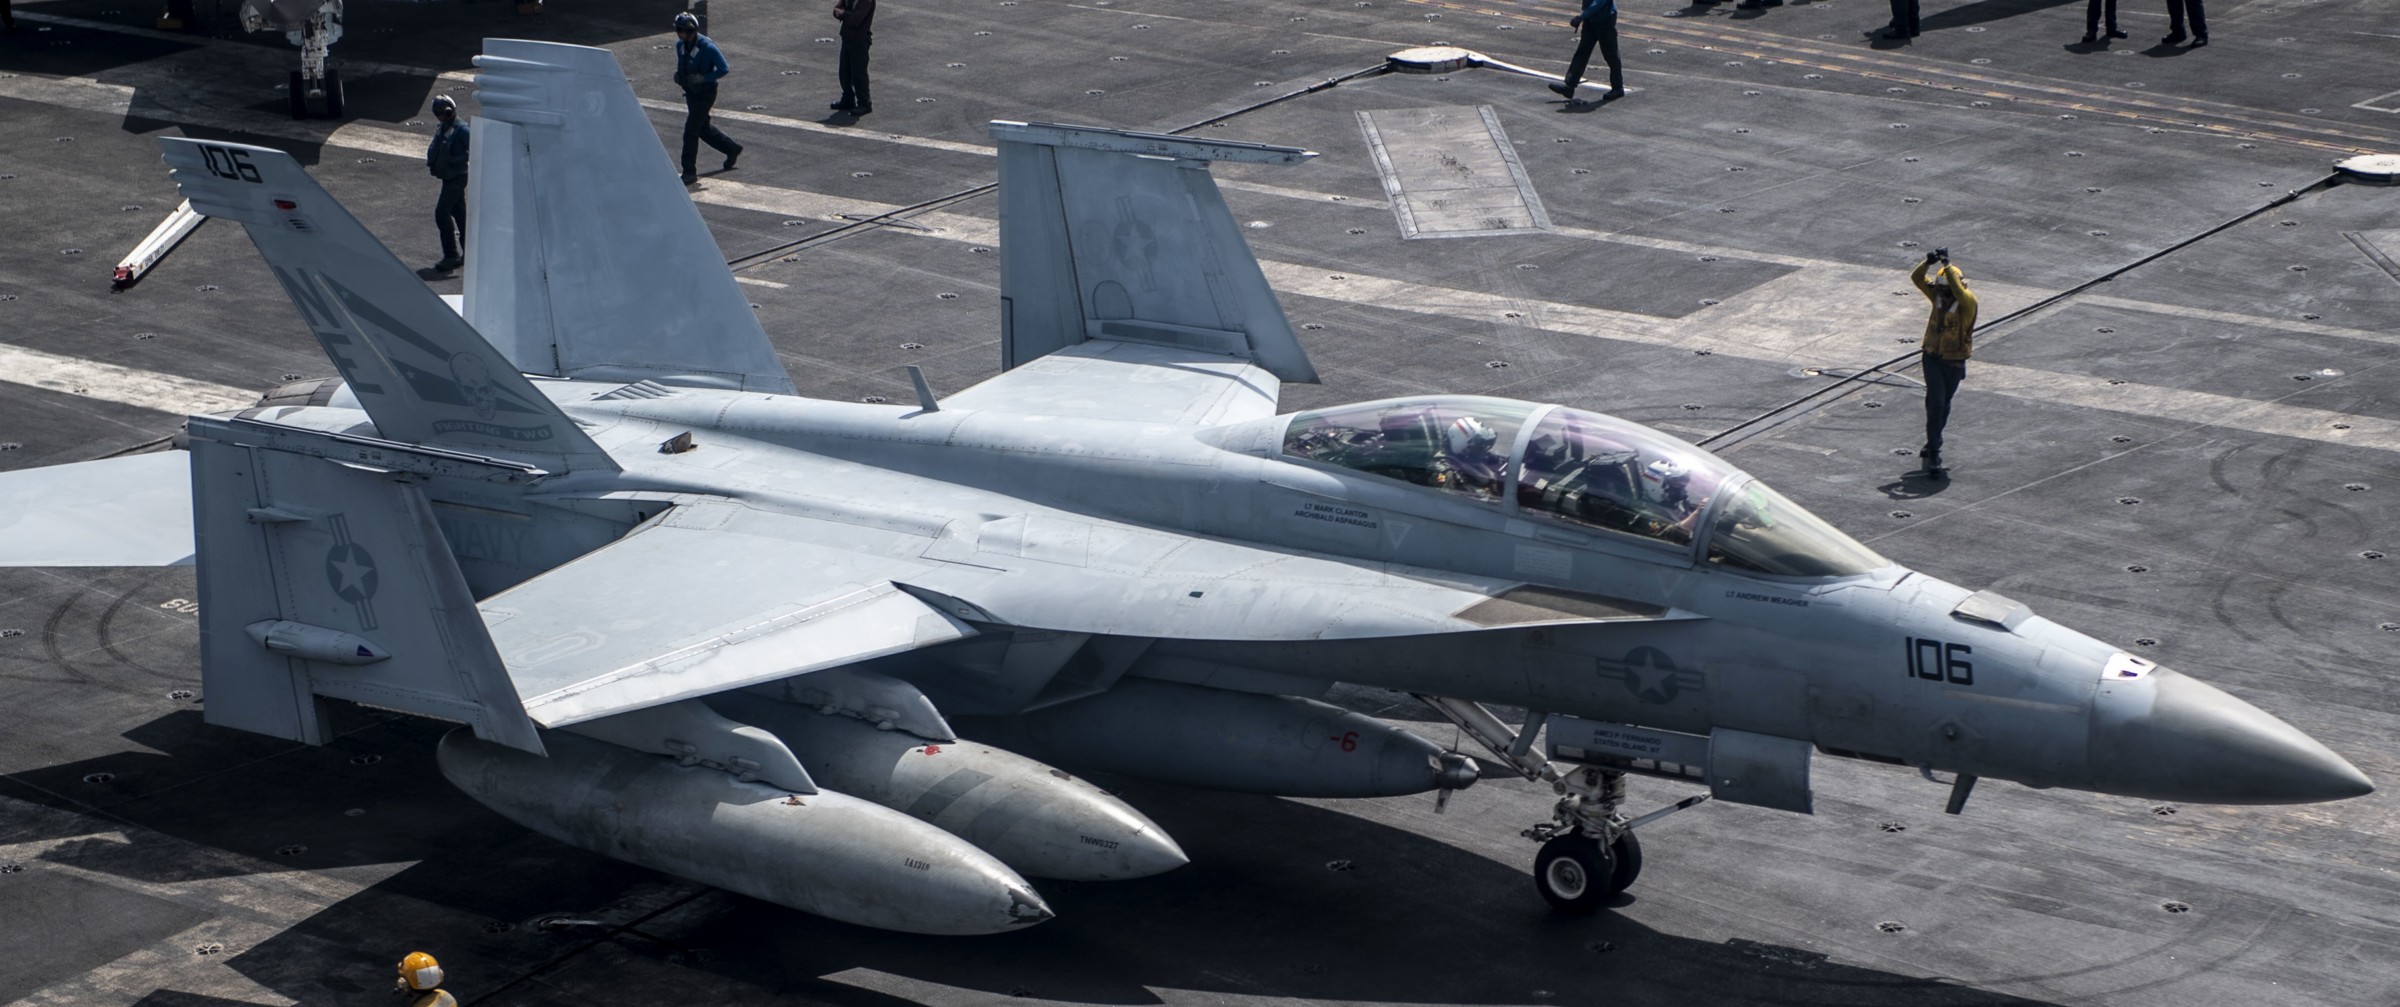 vfa-2 bounty hunters strike fighter squadron us navy f/a-18f super hornet carrier air wing cvw-2 uss carl vinson cvn-70 76